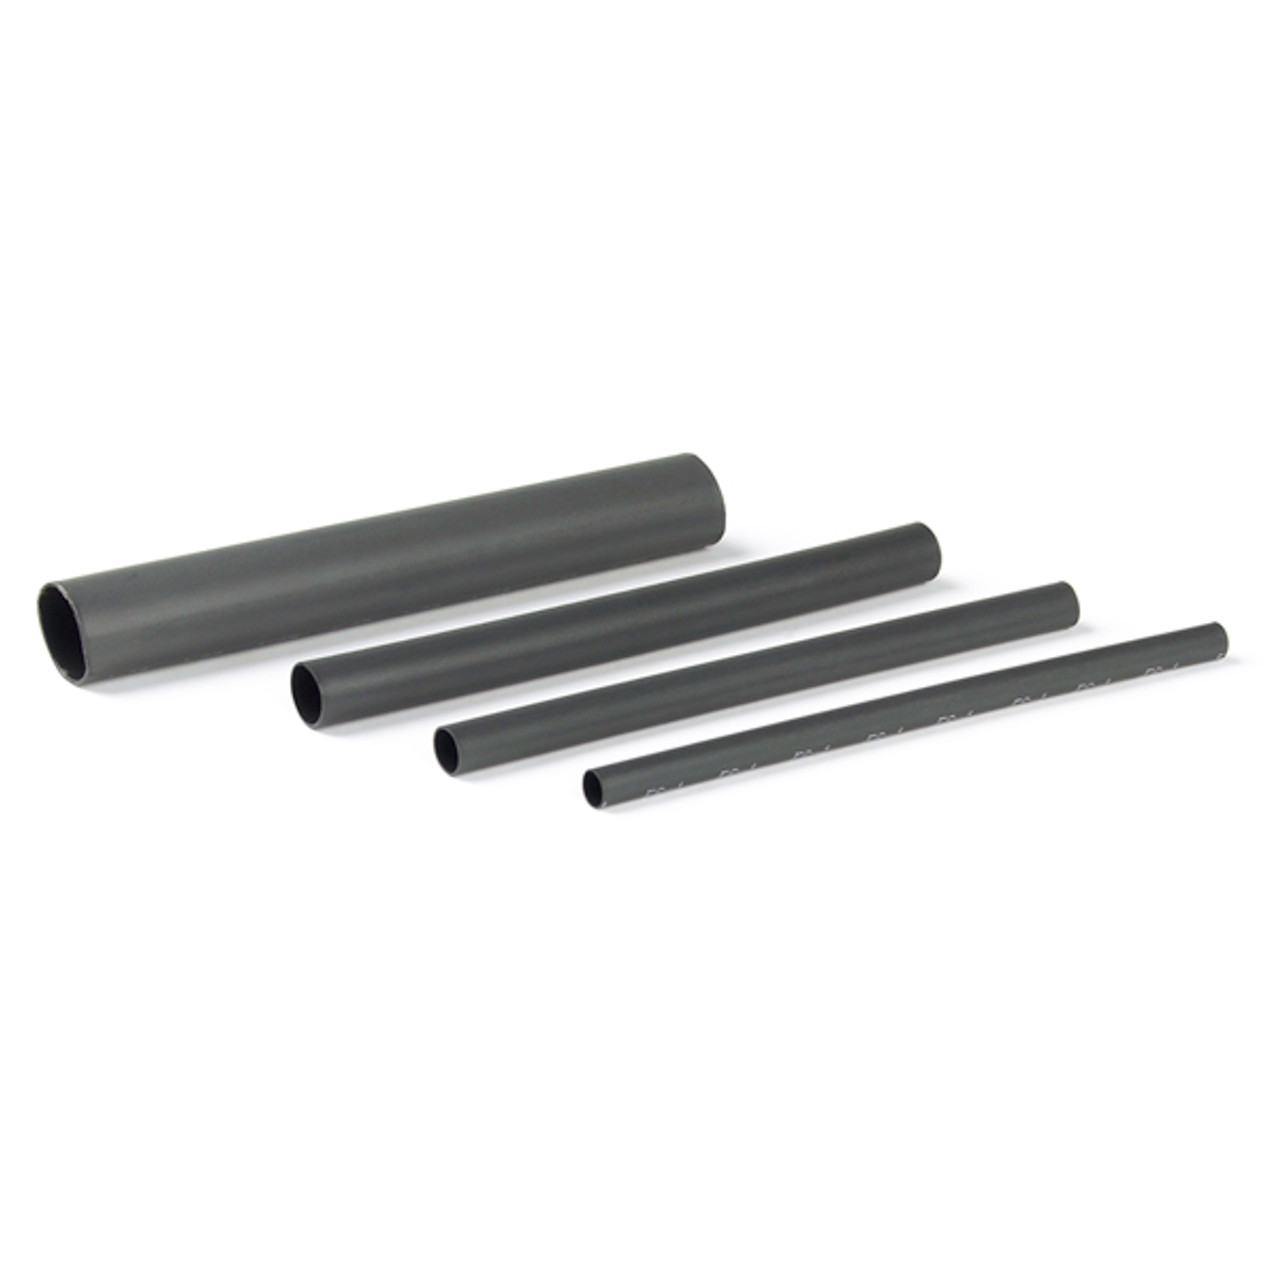 3/4" Dual Wall 3:1 Flexible Adhesive Lined Heat Shrink Tubing 48" @ 6 Pack - Black  84-4020-48